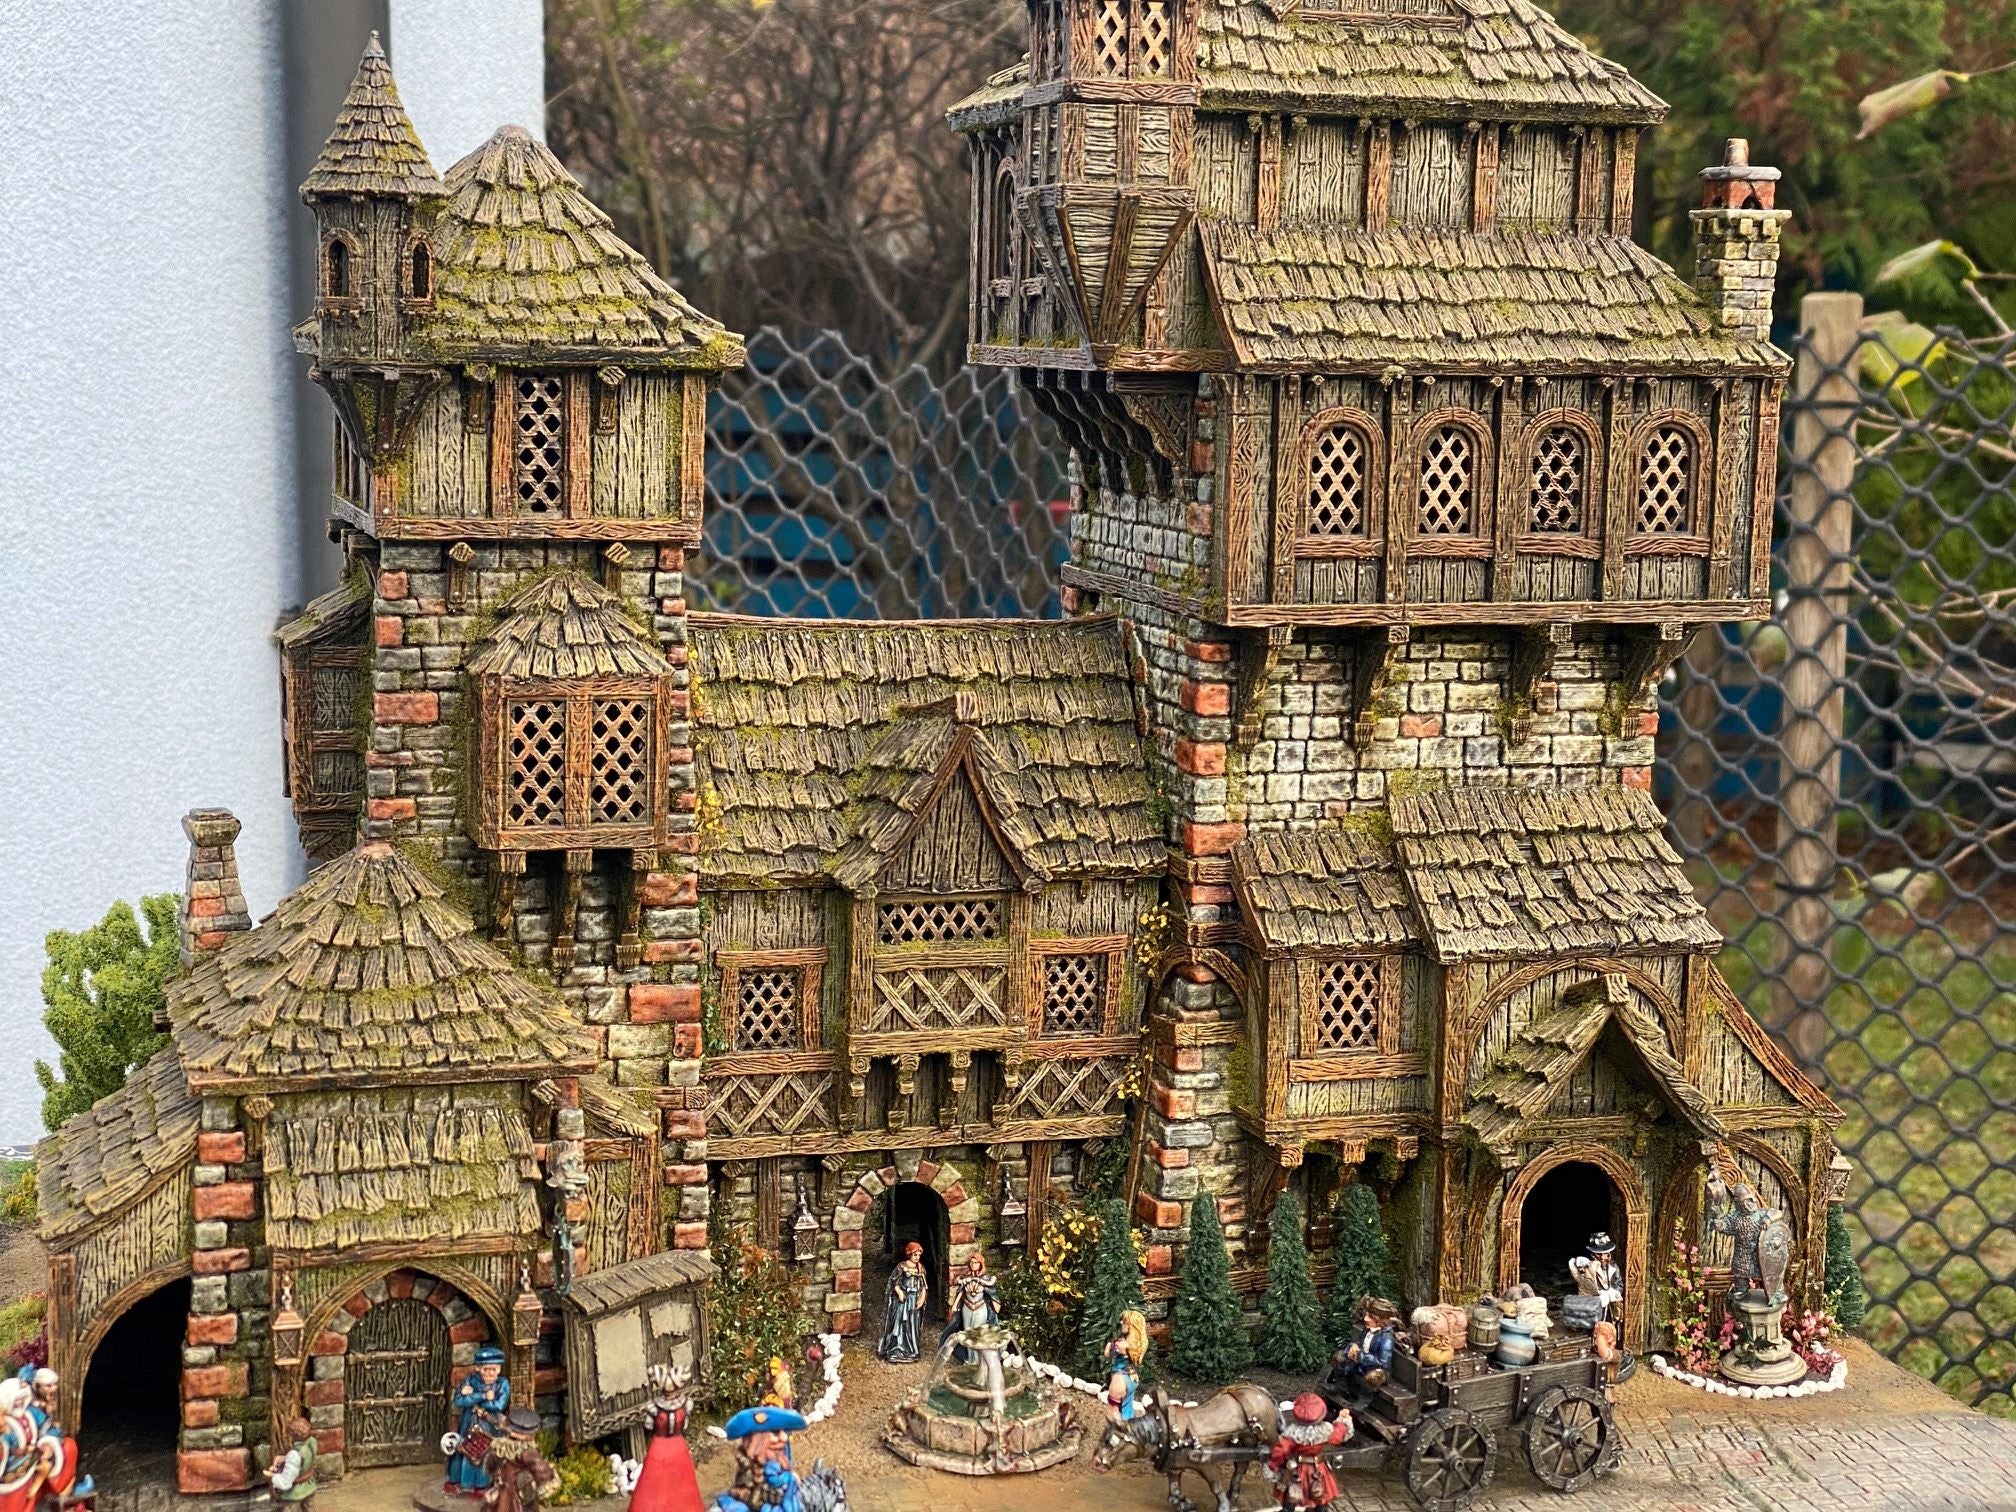 ELEGOO Established Sponsorship with Kuba Sawicki to build a giant Medieval Fantasy City tabletop scene